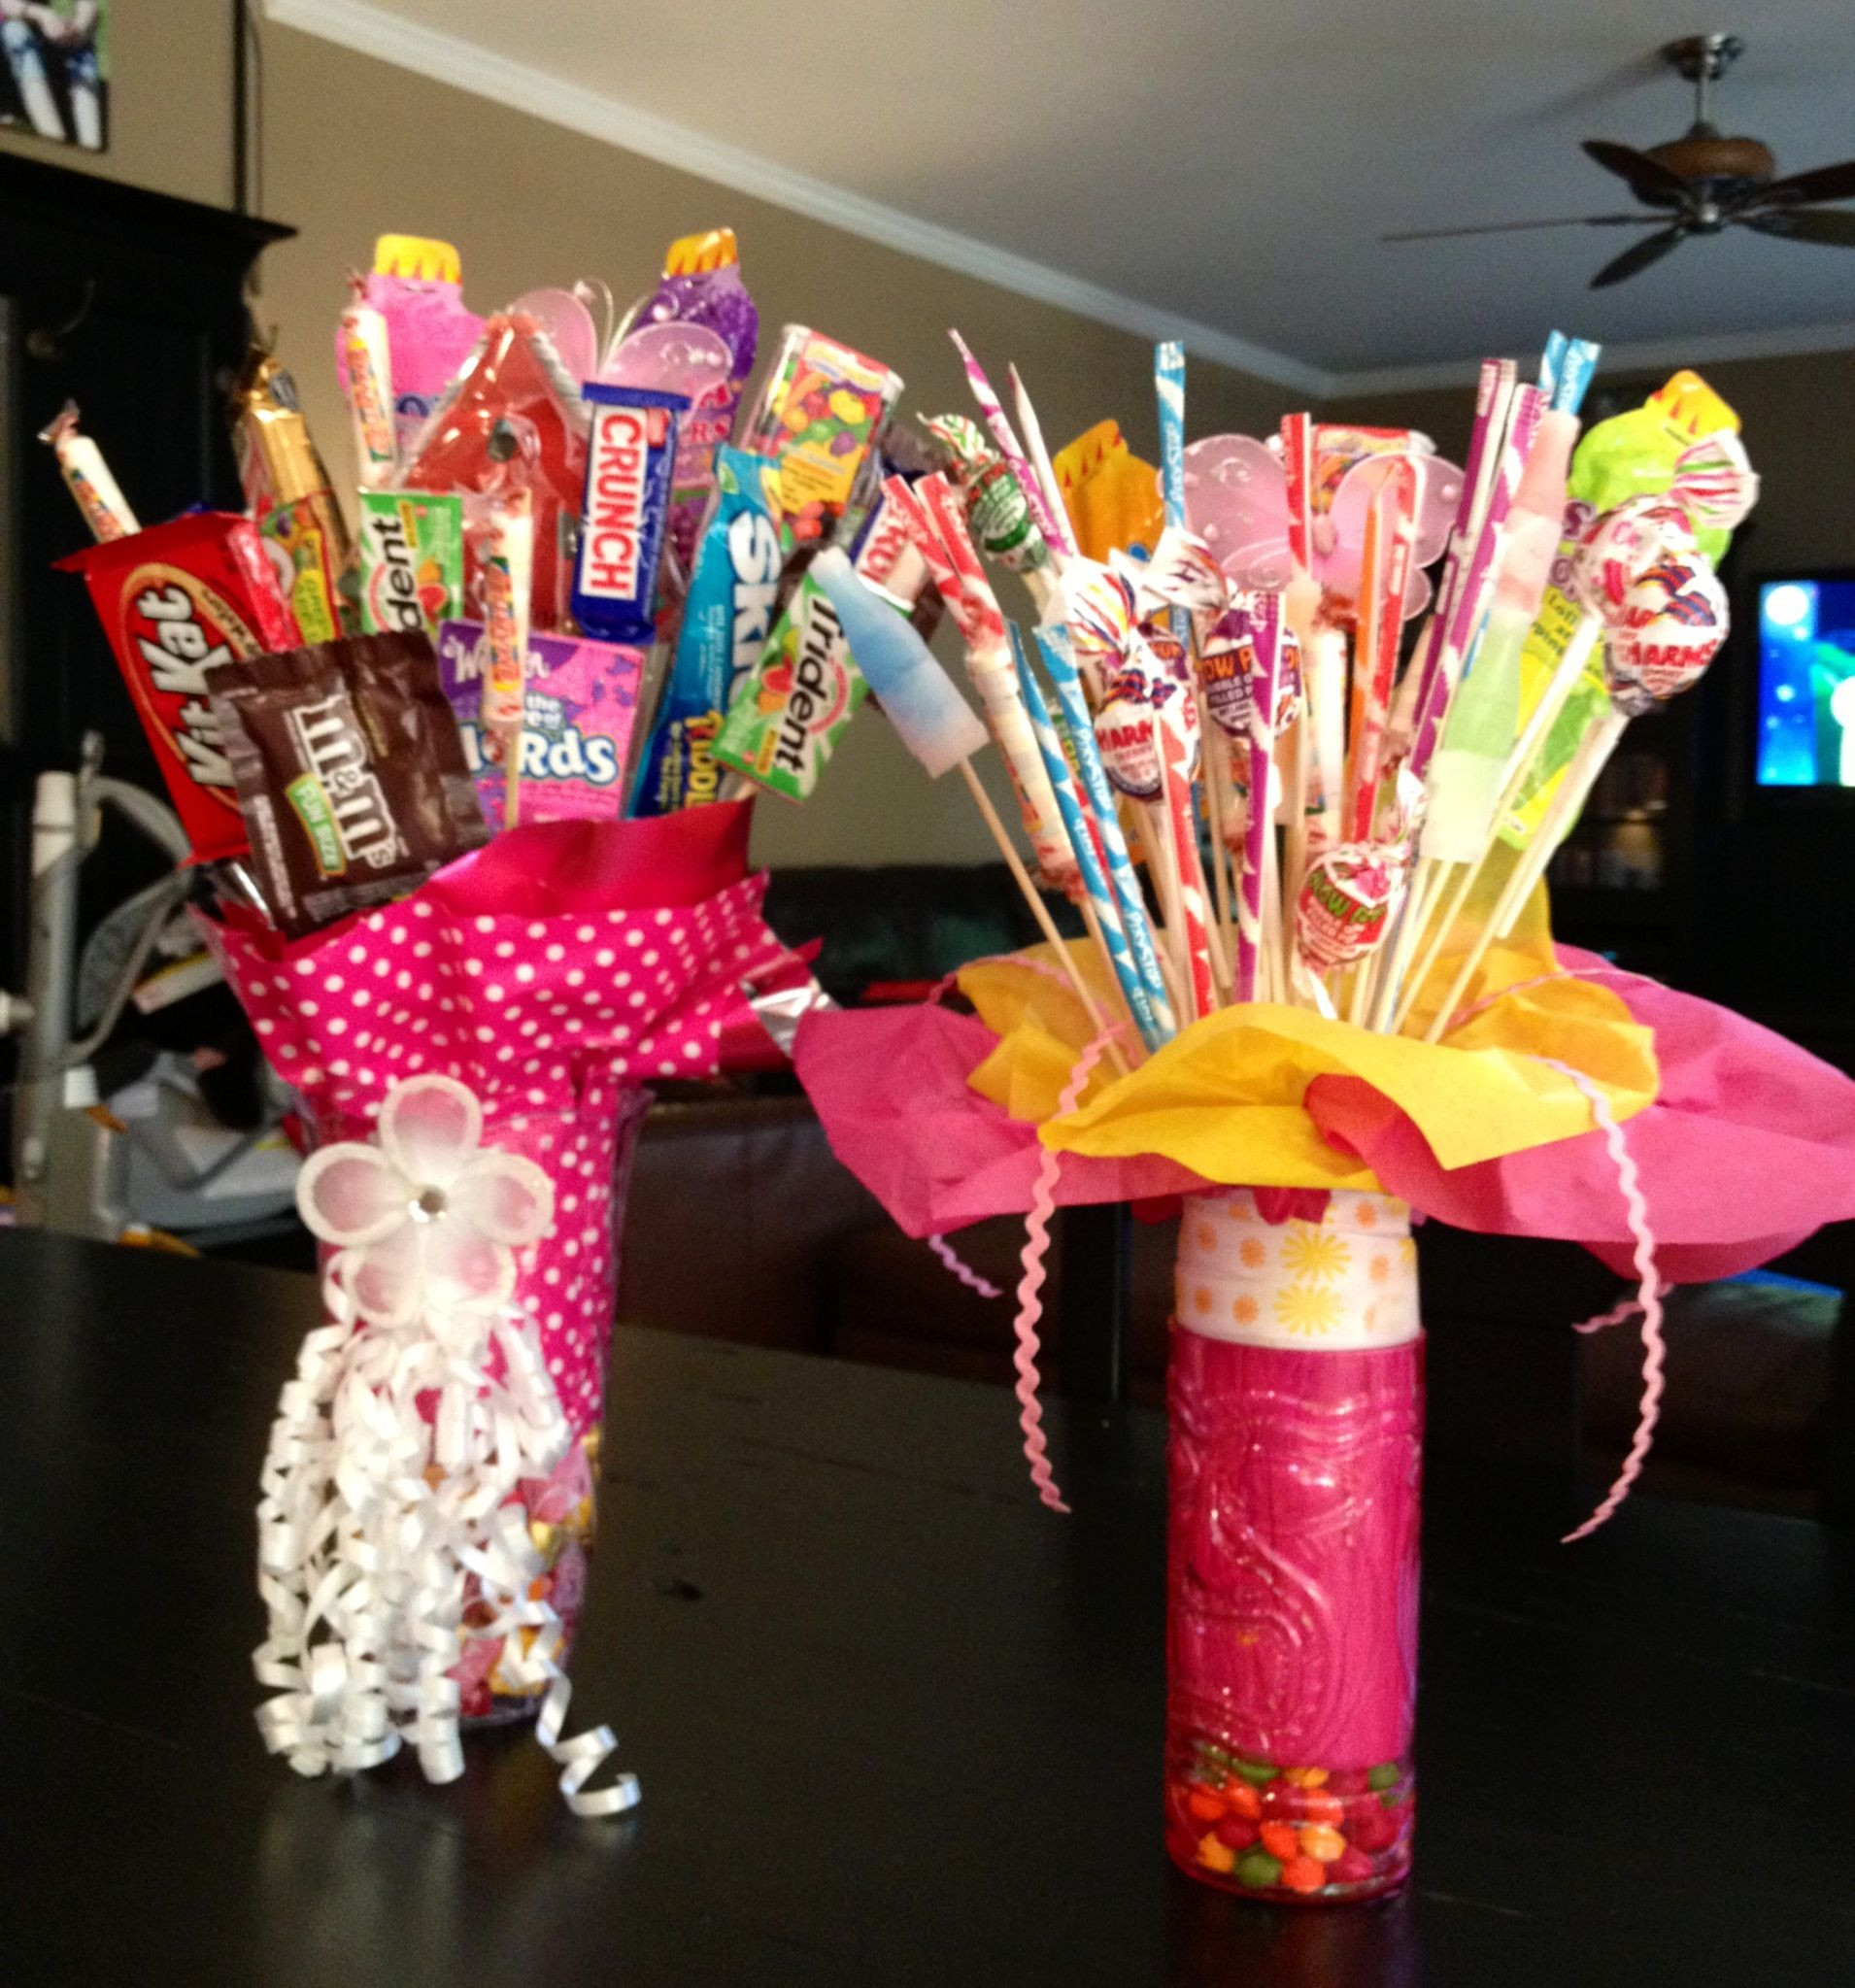 Elementary School Graduation Gift Ideas
 Candy bouquets for 5th grade graduation Idea for Riley